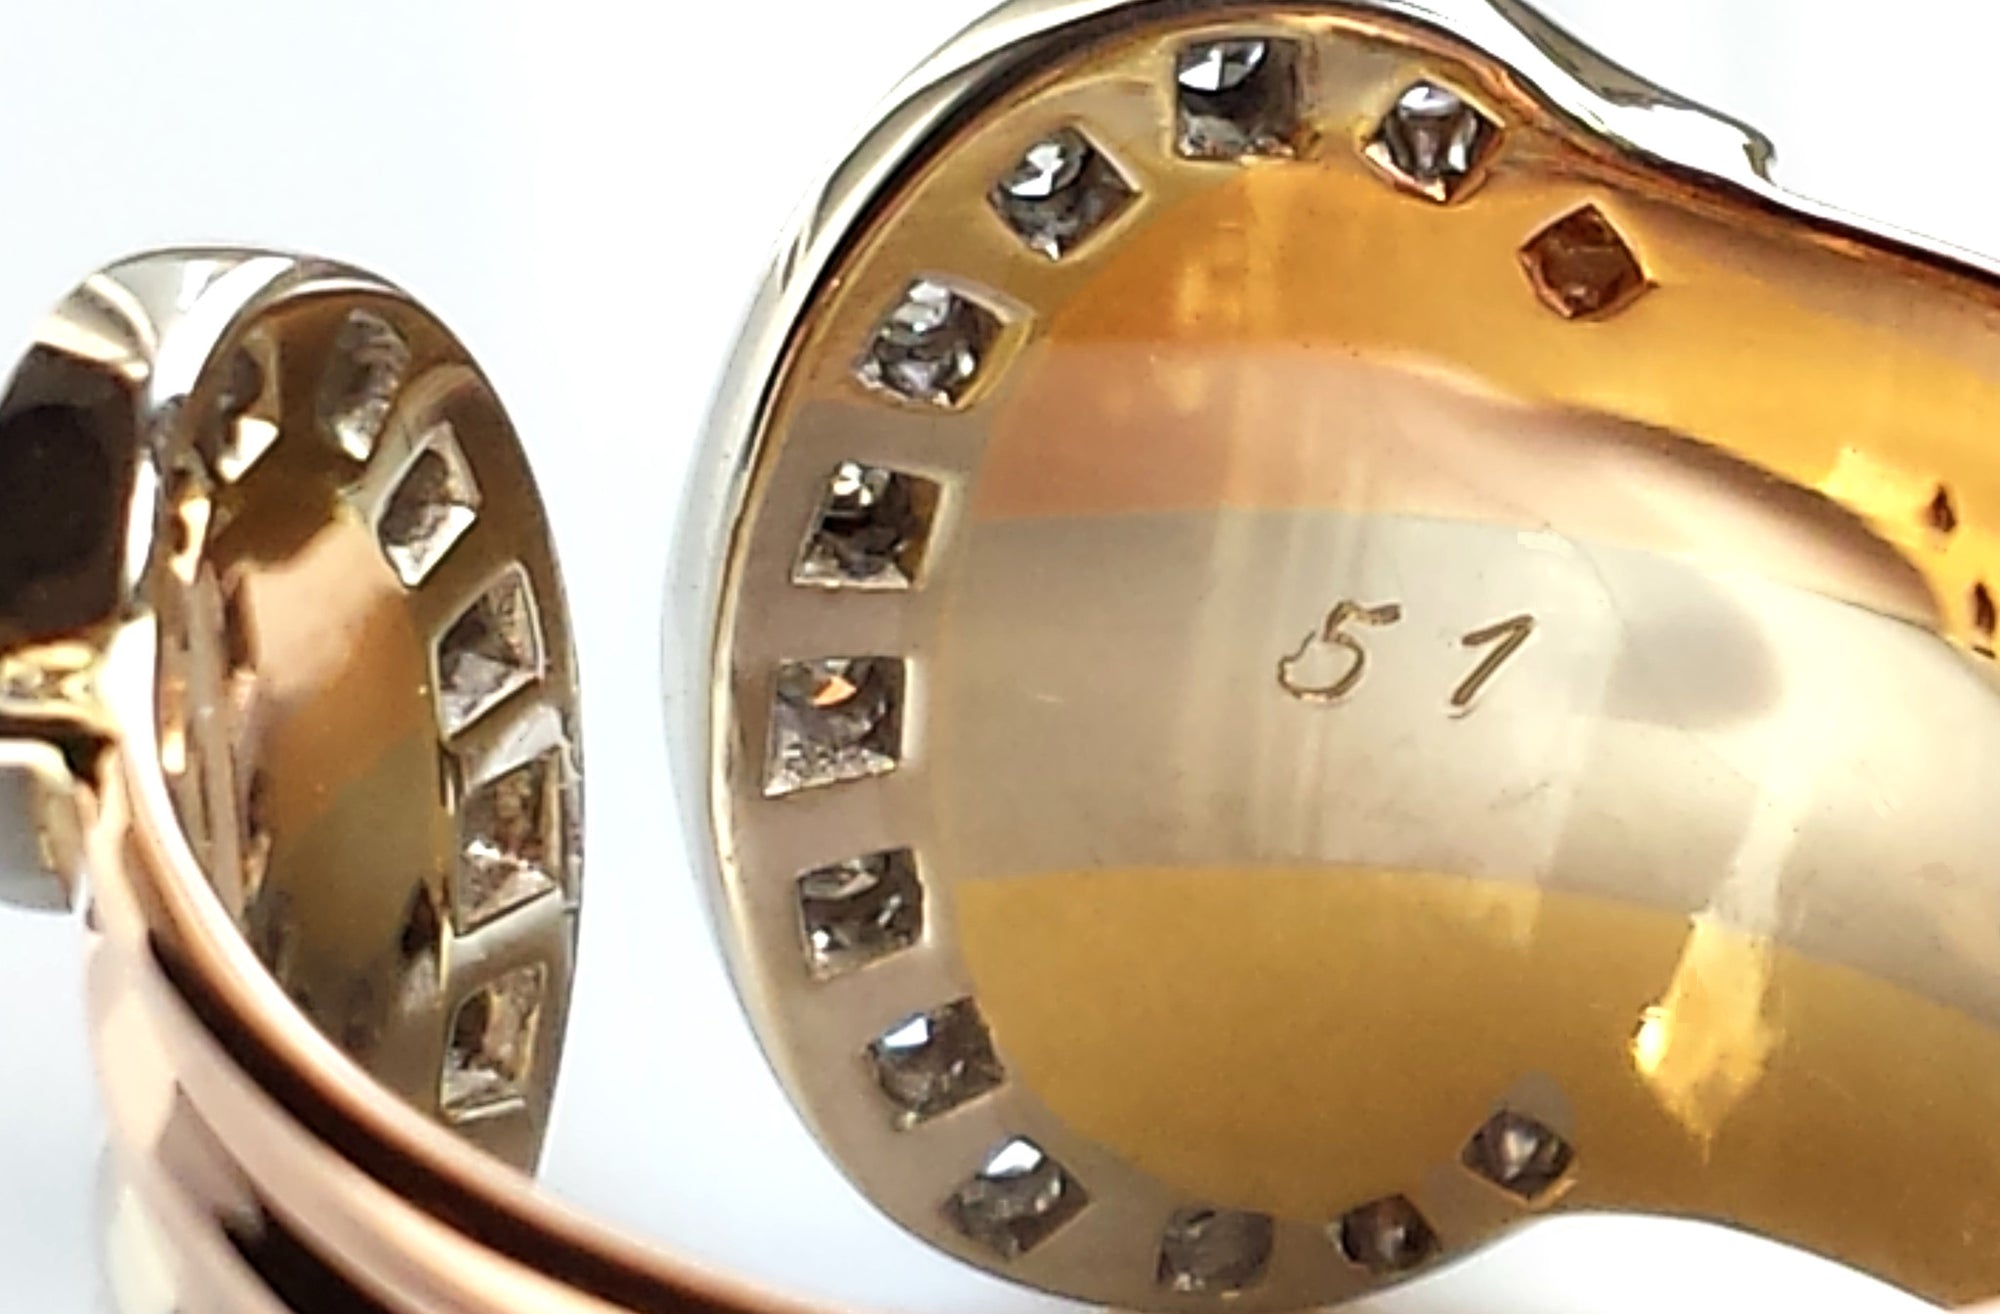 Cartier Double C 'de Cartier' Decor Trinity Ring in 18K Gold & Diamond Setting, Size 51